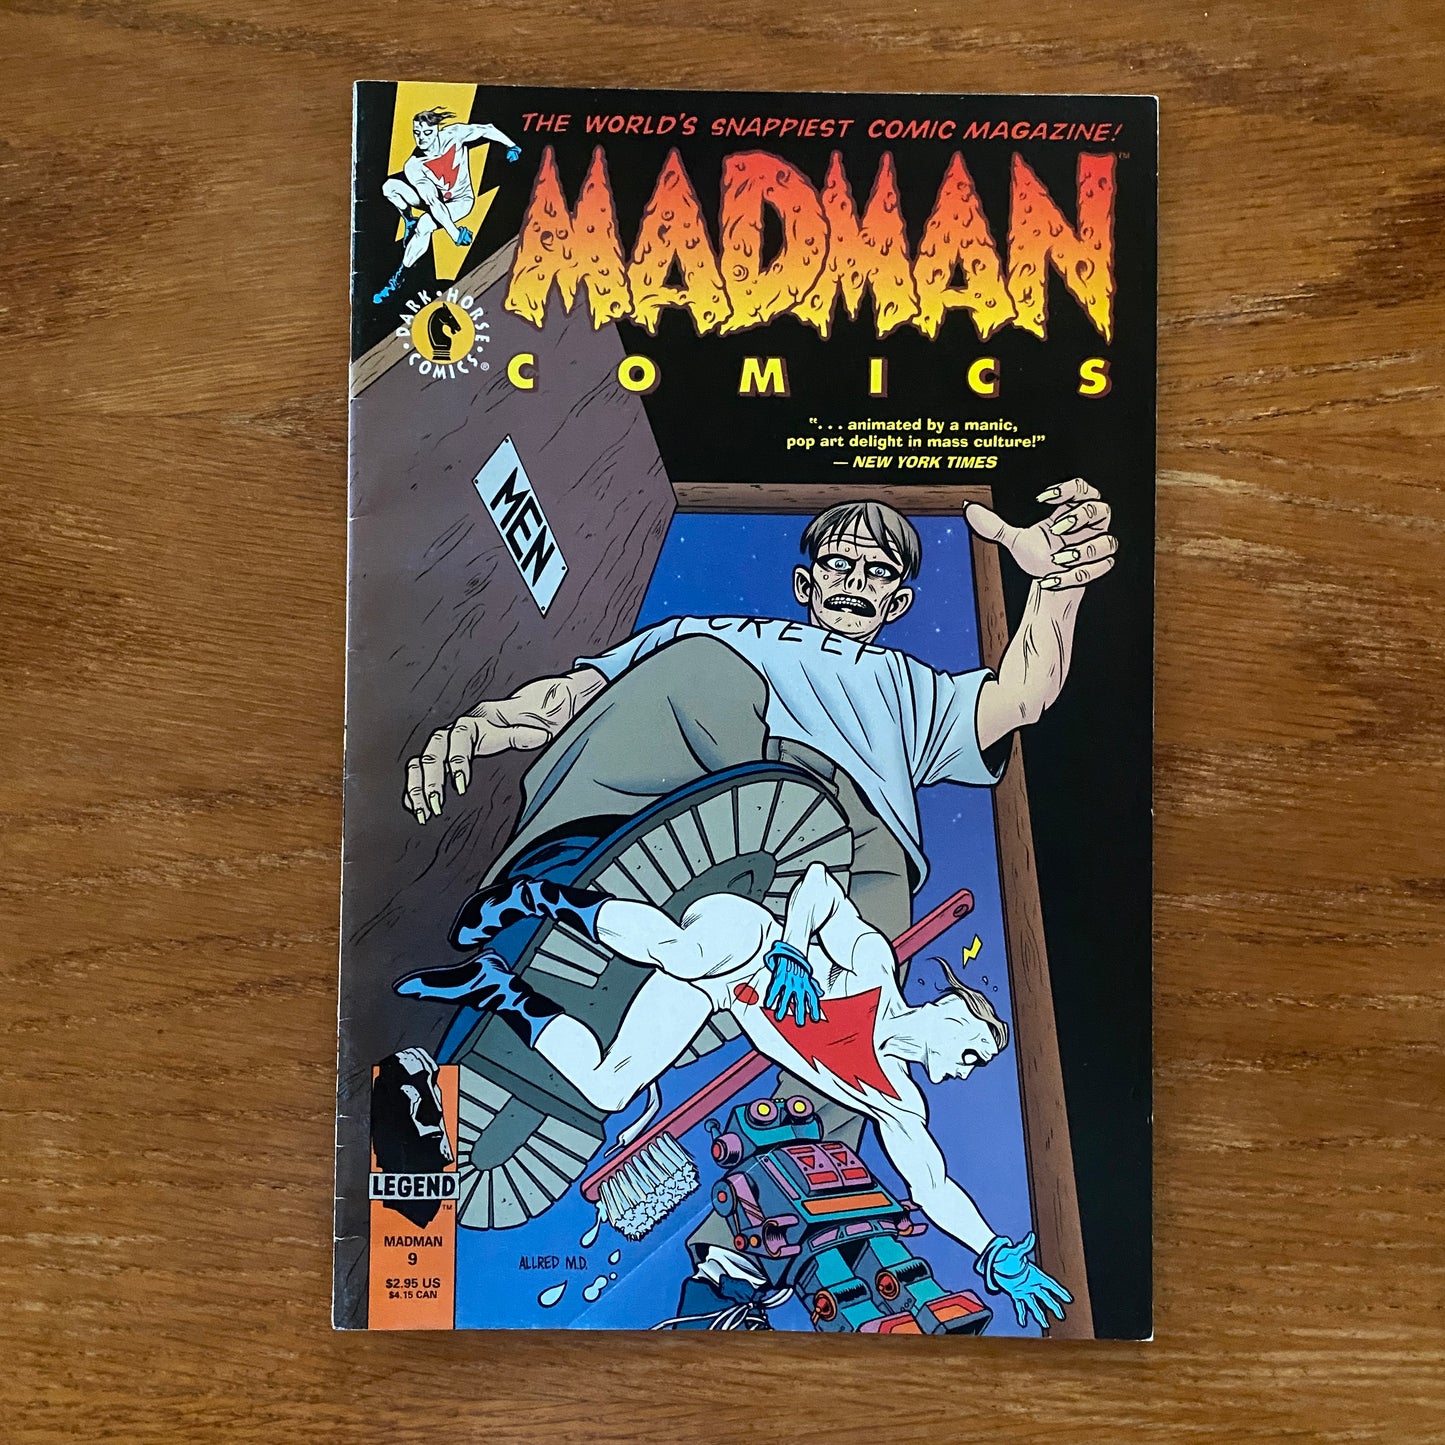 Madman 9 - Mike Allread